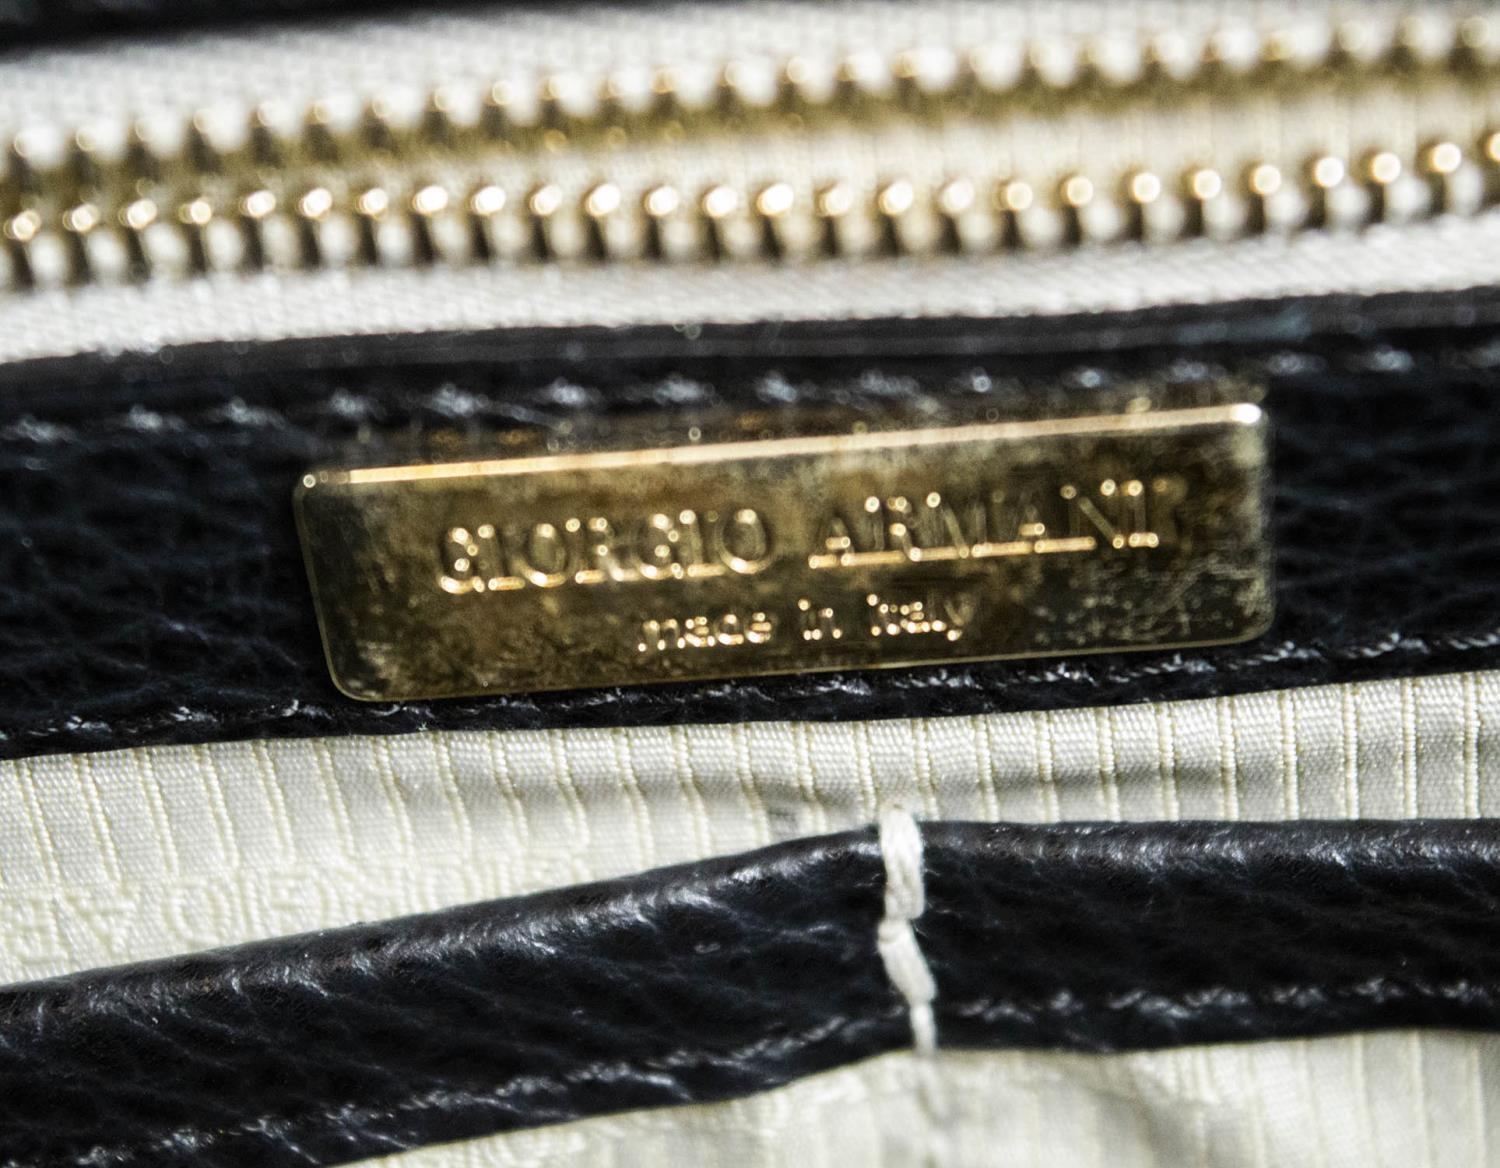 GIORGIO ARMANI HANDBAG, leather with pale gold tone hardware and logo charm, two top handles, bottom - Image 8 of 10